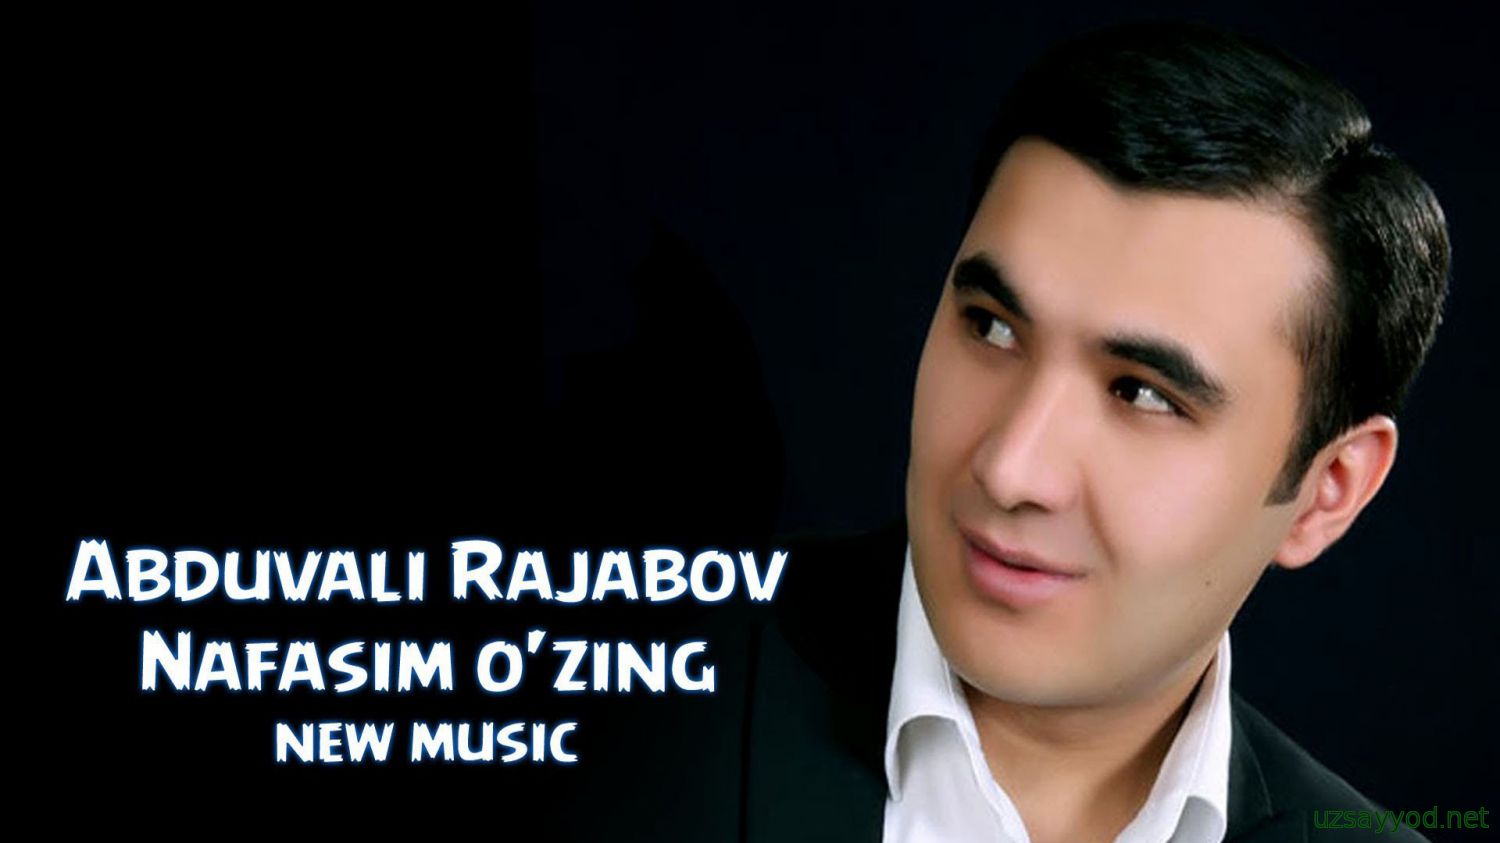 Abduvali Rajabov - Nafasim o'zing (new music)